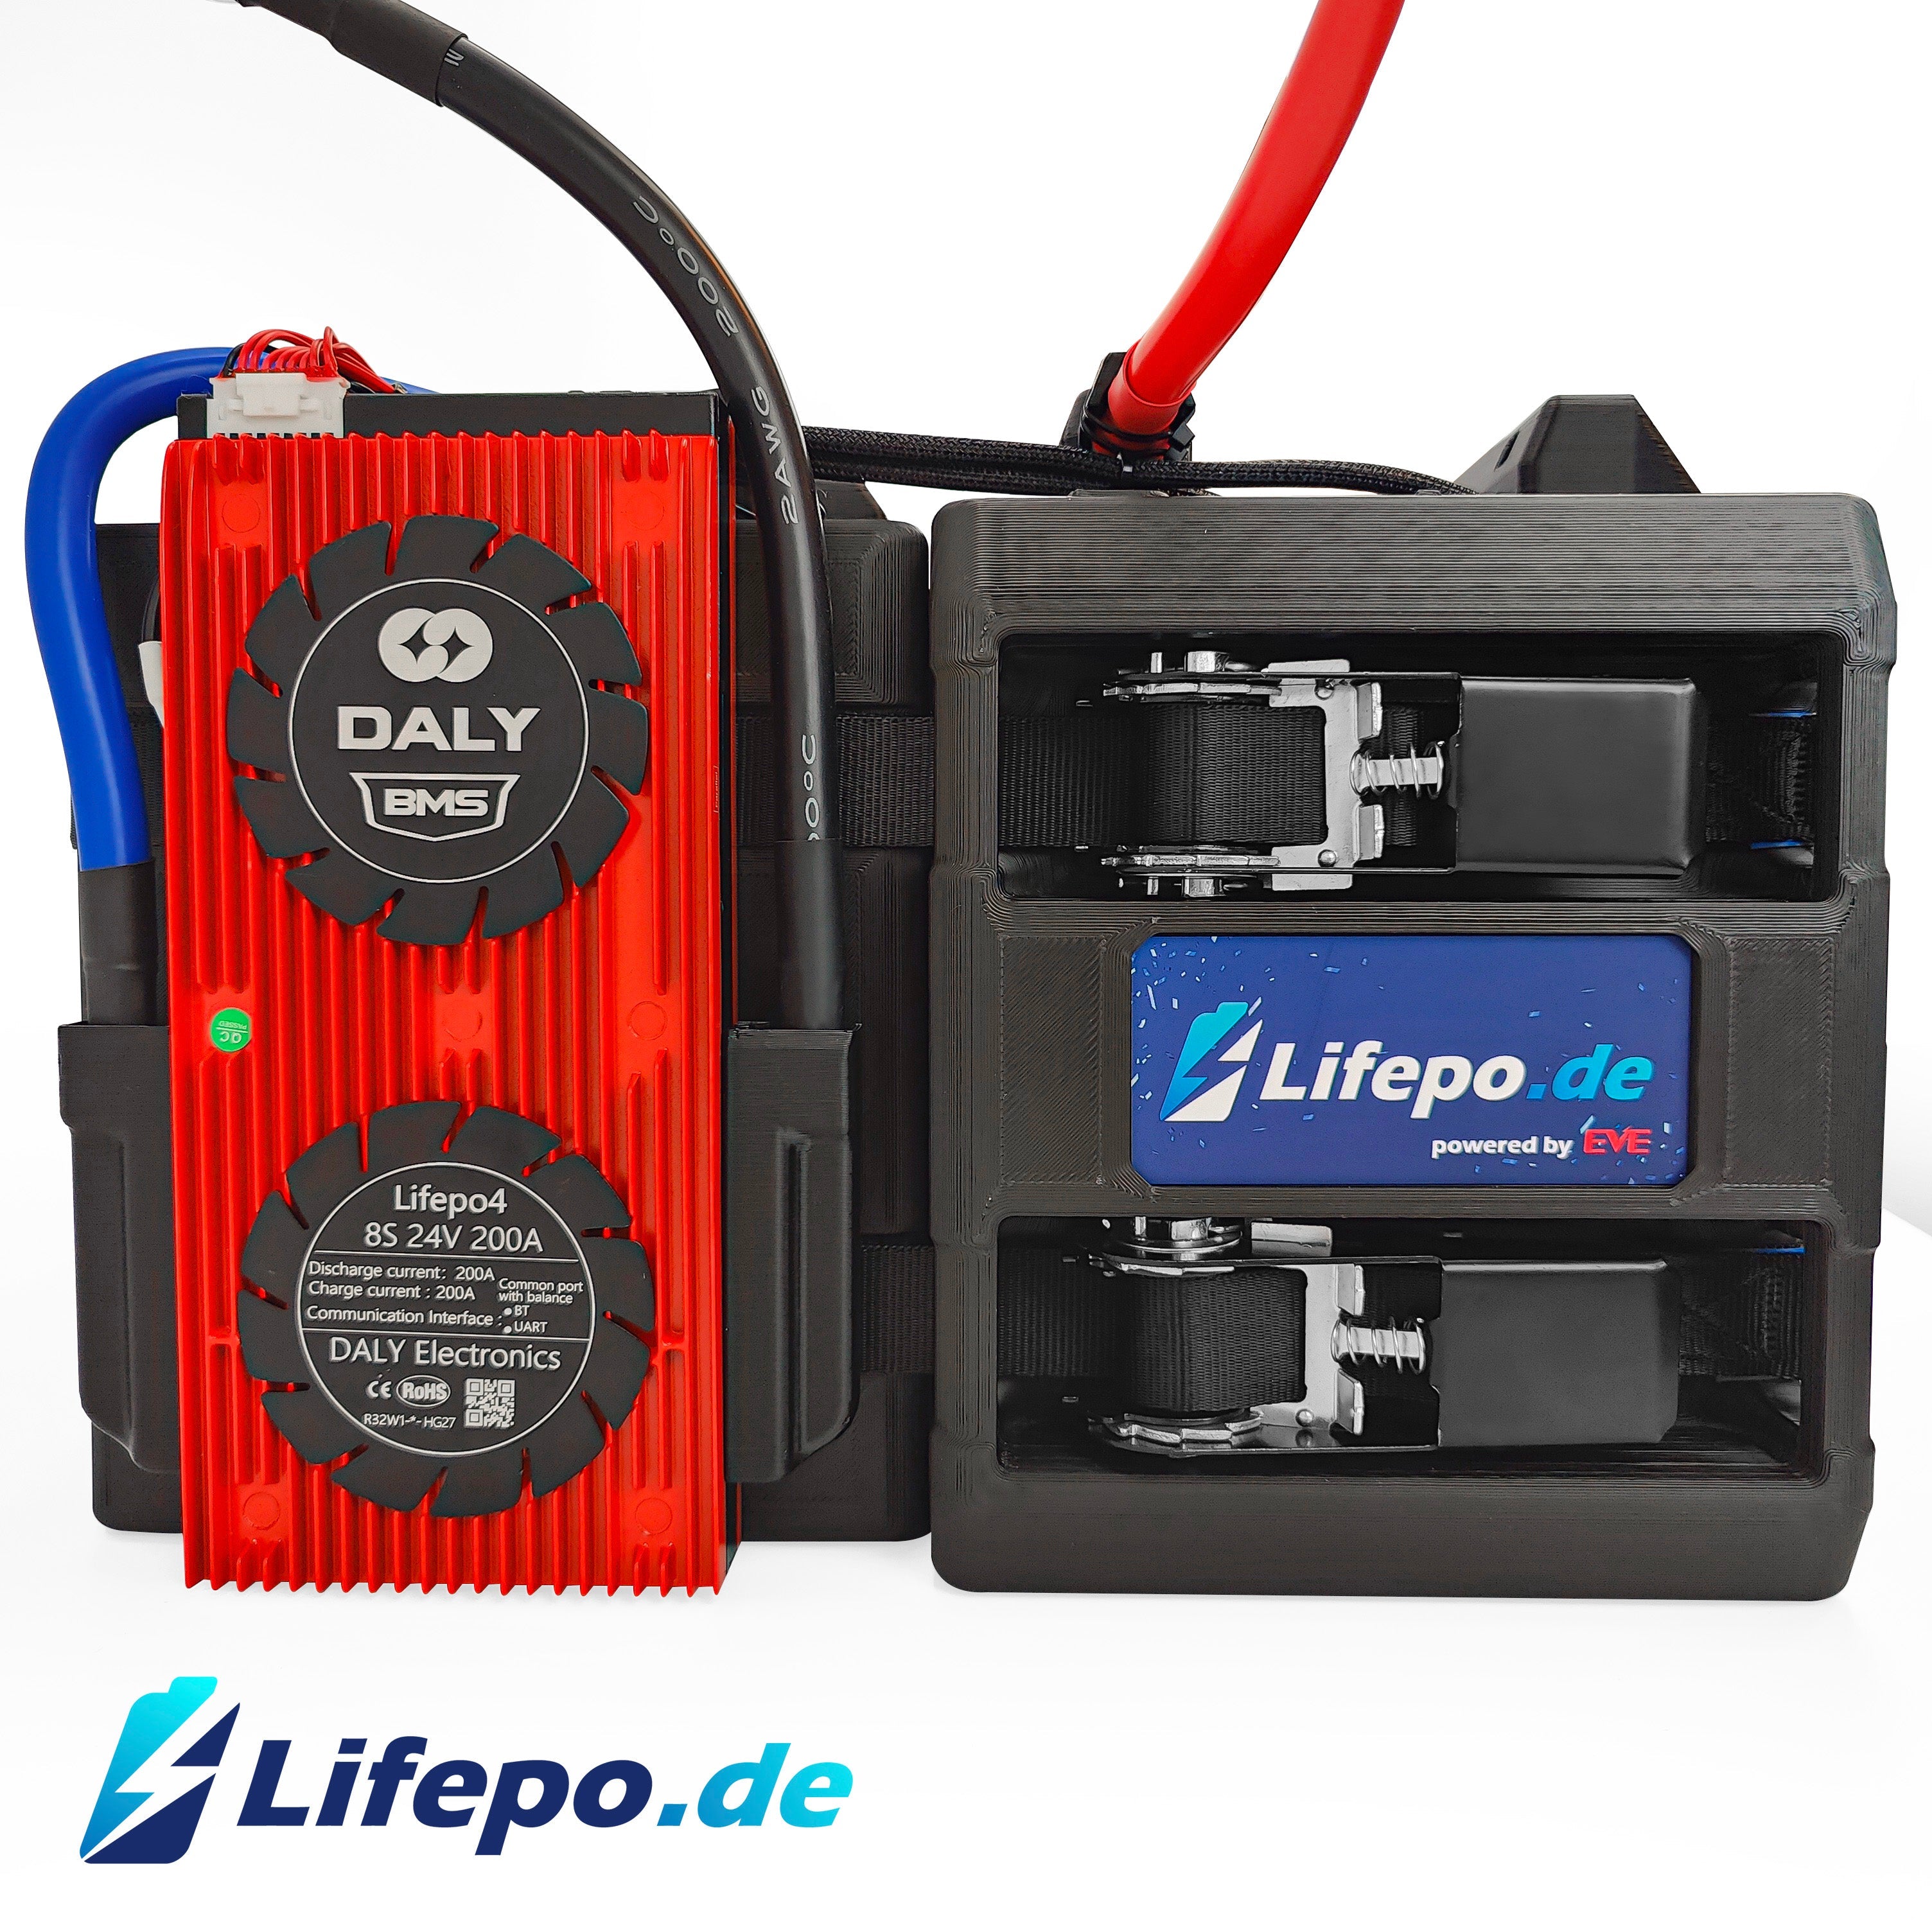 0% MwSt 24v 560Ah Lifepo4 Batteriesystem mit EVE Grade A+ 16kWh